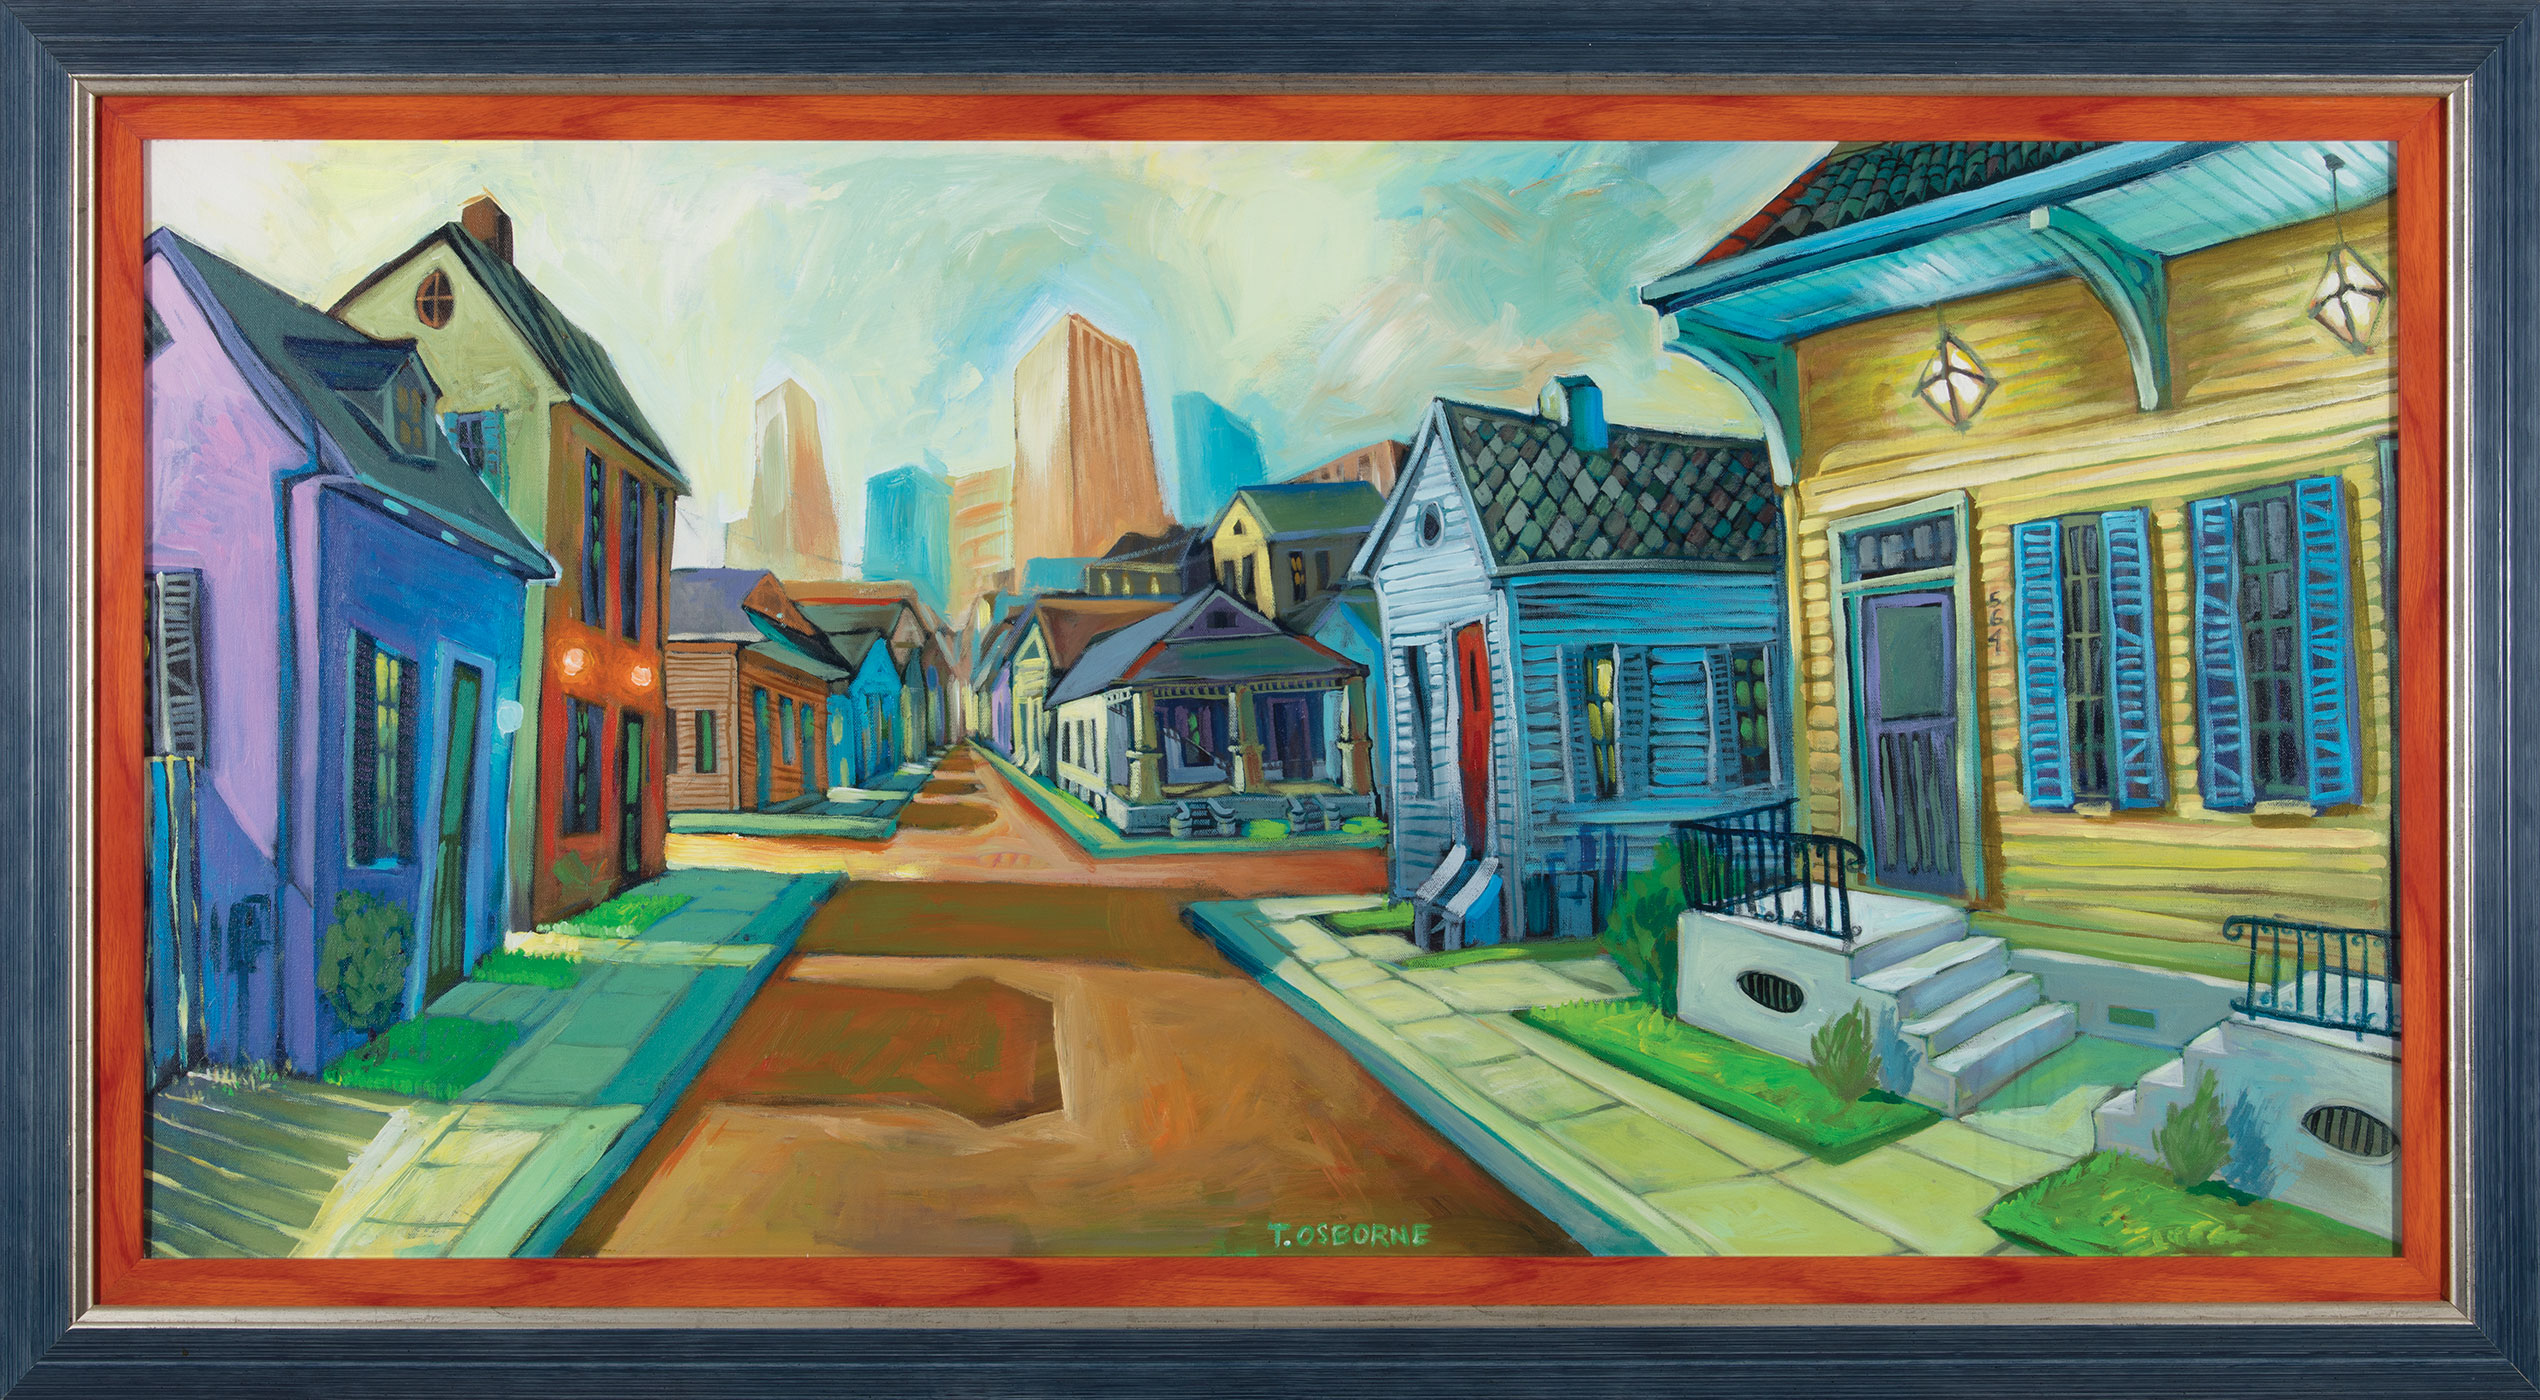 Terrance Osborne (American/New Orleans, b. 1976), "New Orleans Street Scene", acrylic on canvas,